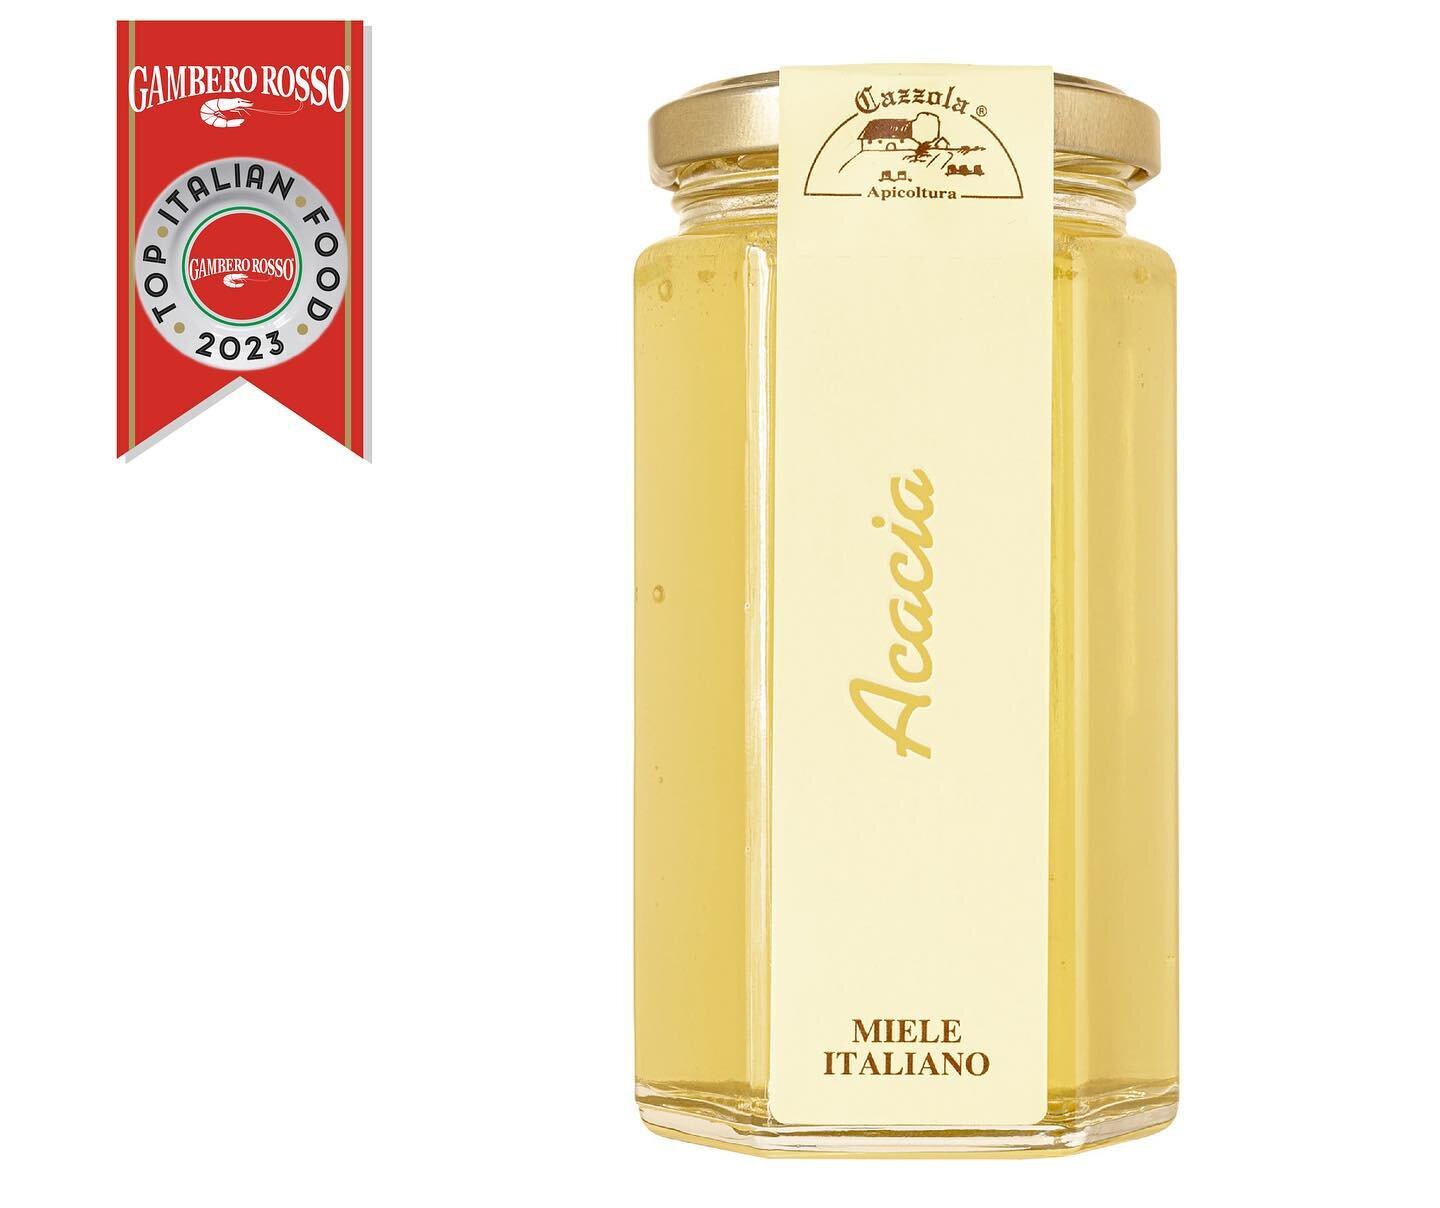 Miele di Acacia eccellenza Made in Italy 🍯
#topitalianfood2023 #gamberorosso